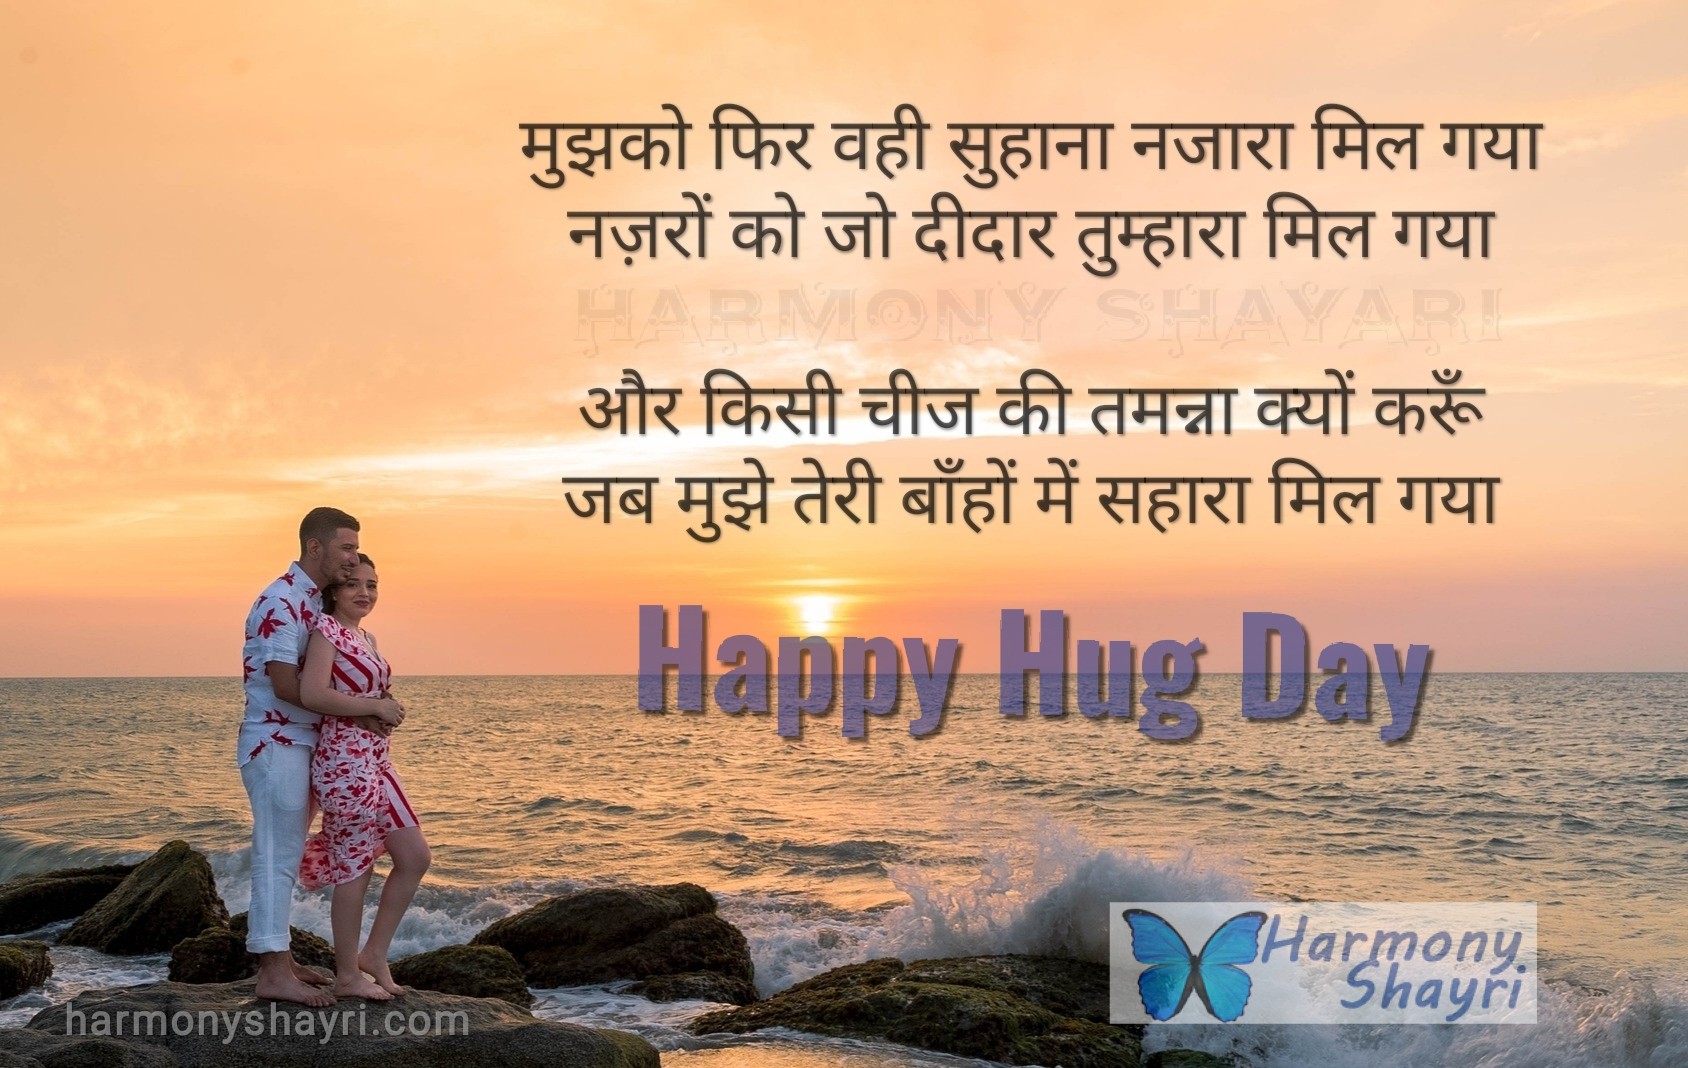 Mujhko fir wahi suhana nazara mil gaya – Happy Hug Day